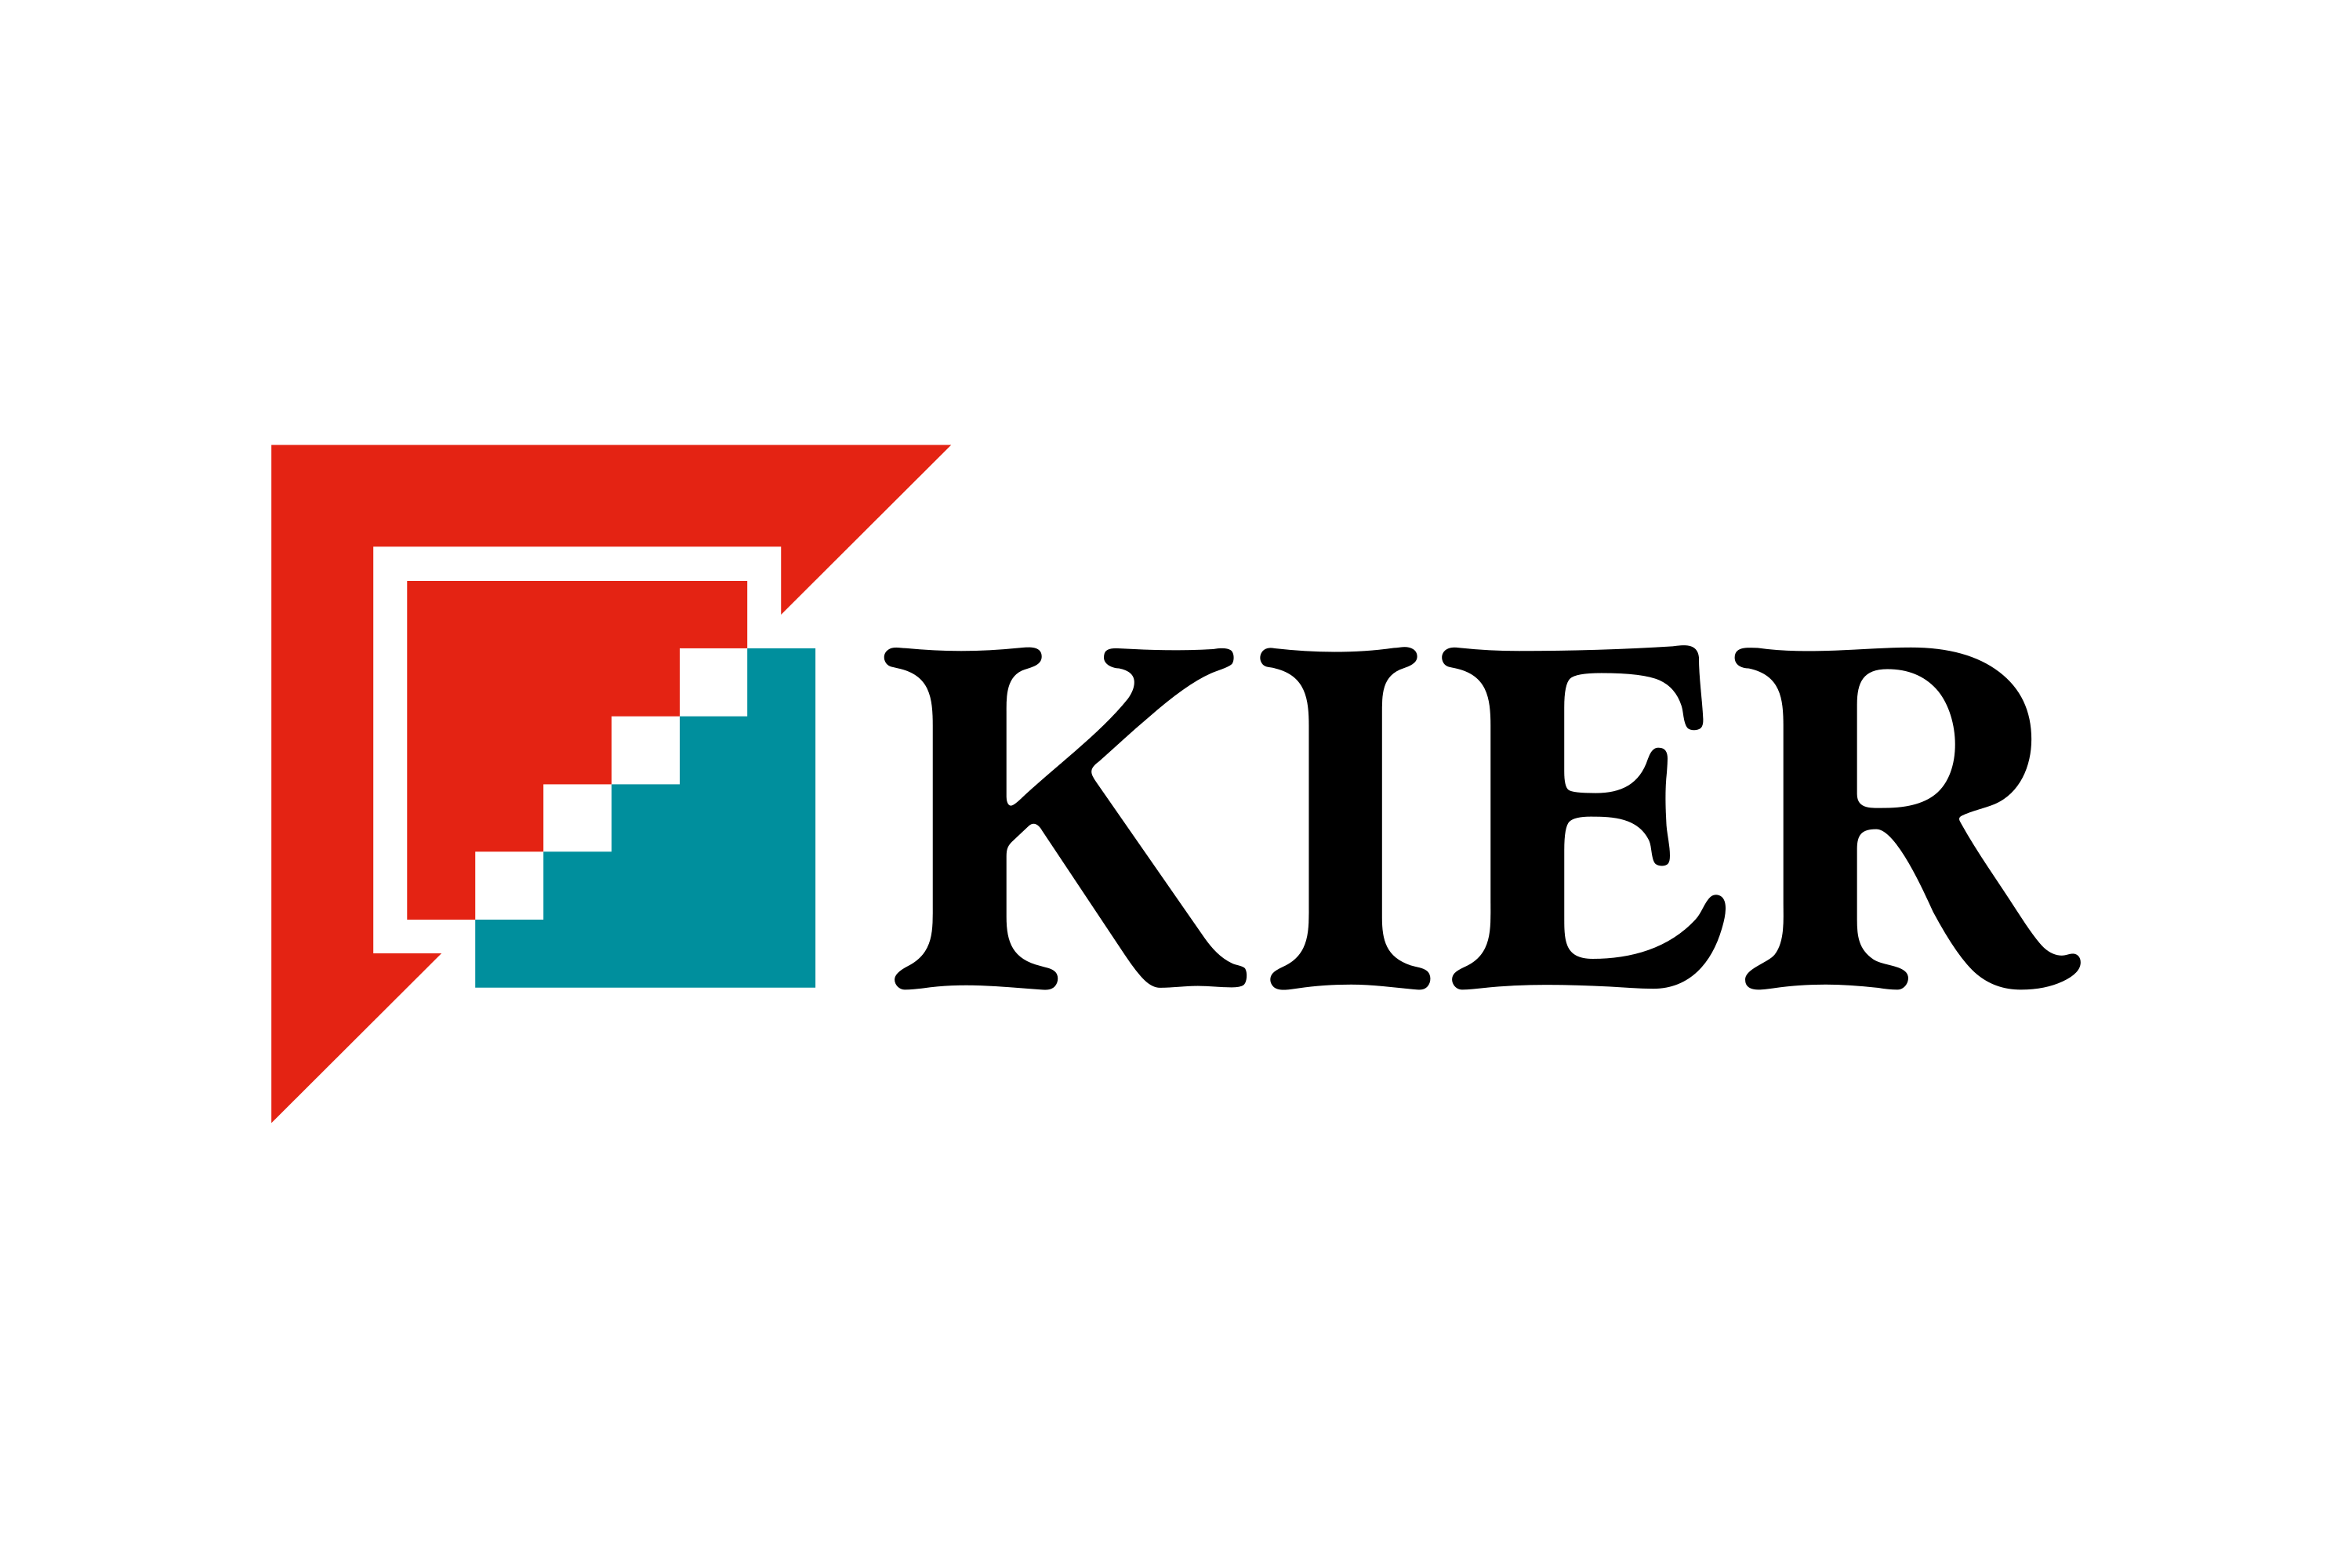 Kier Group Logo